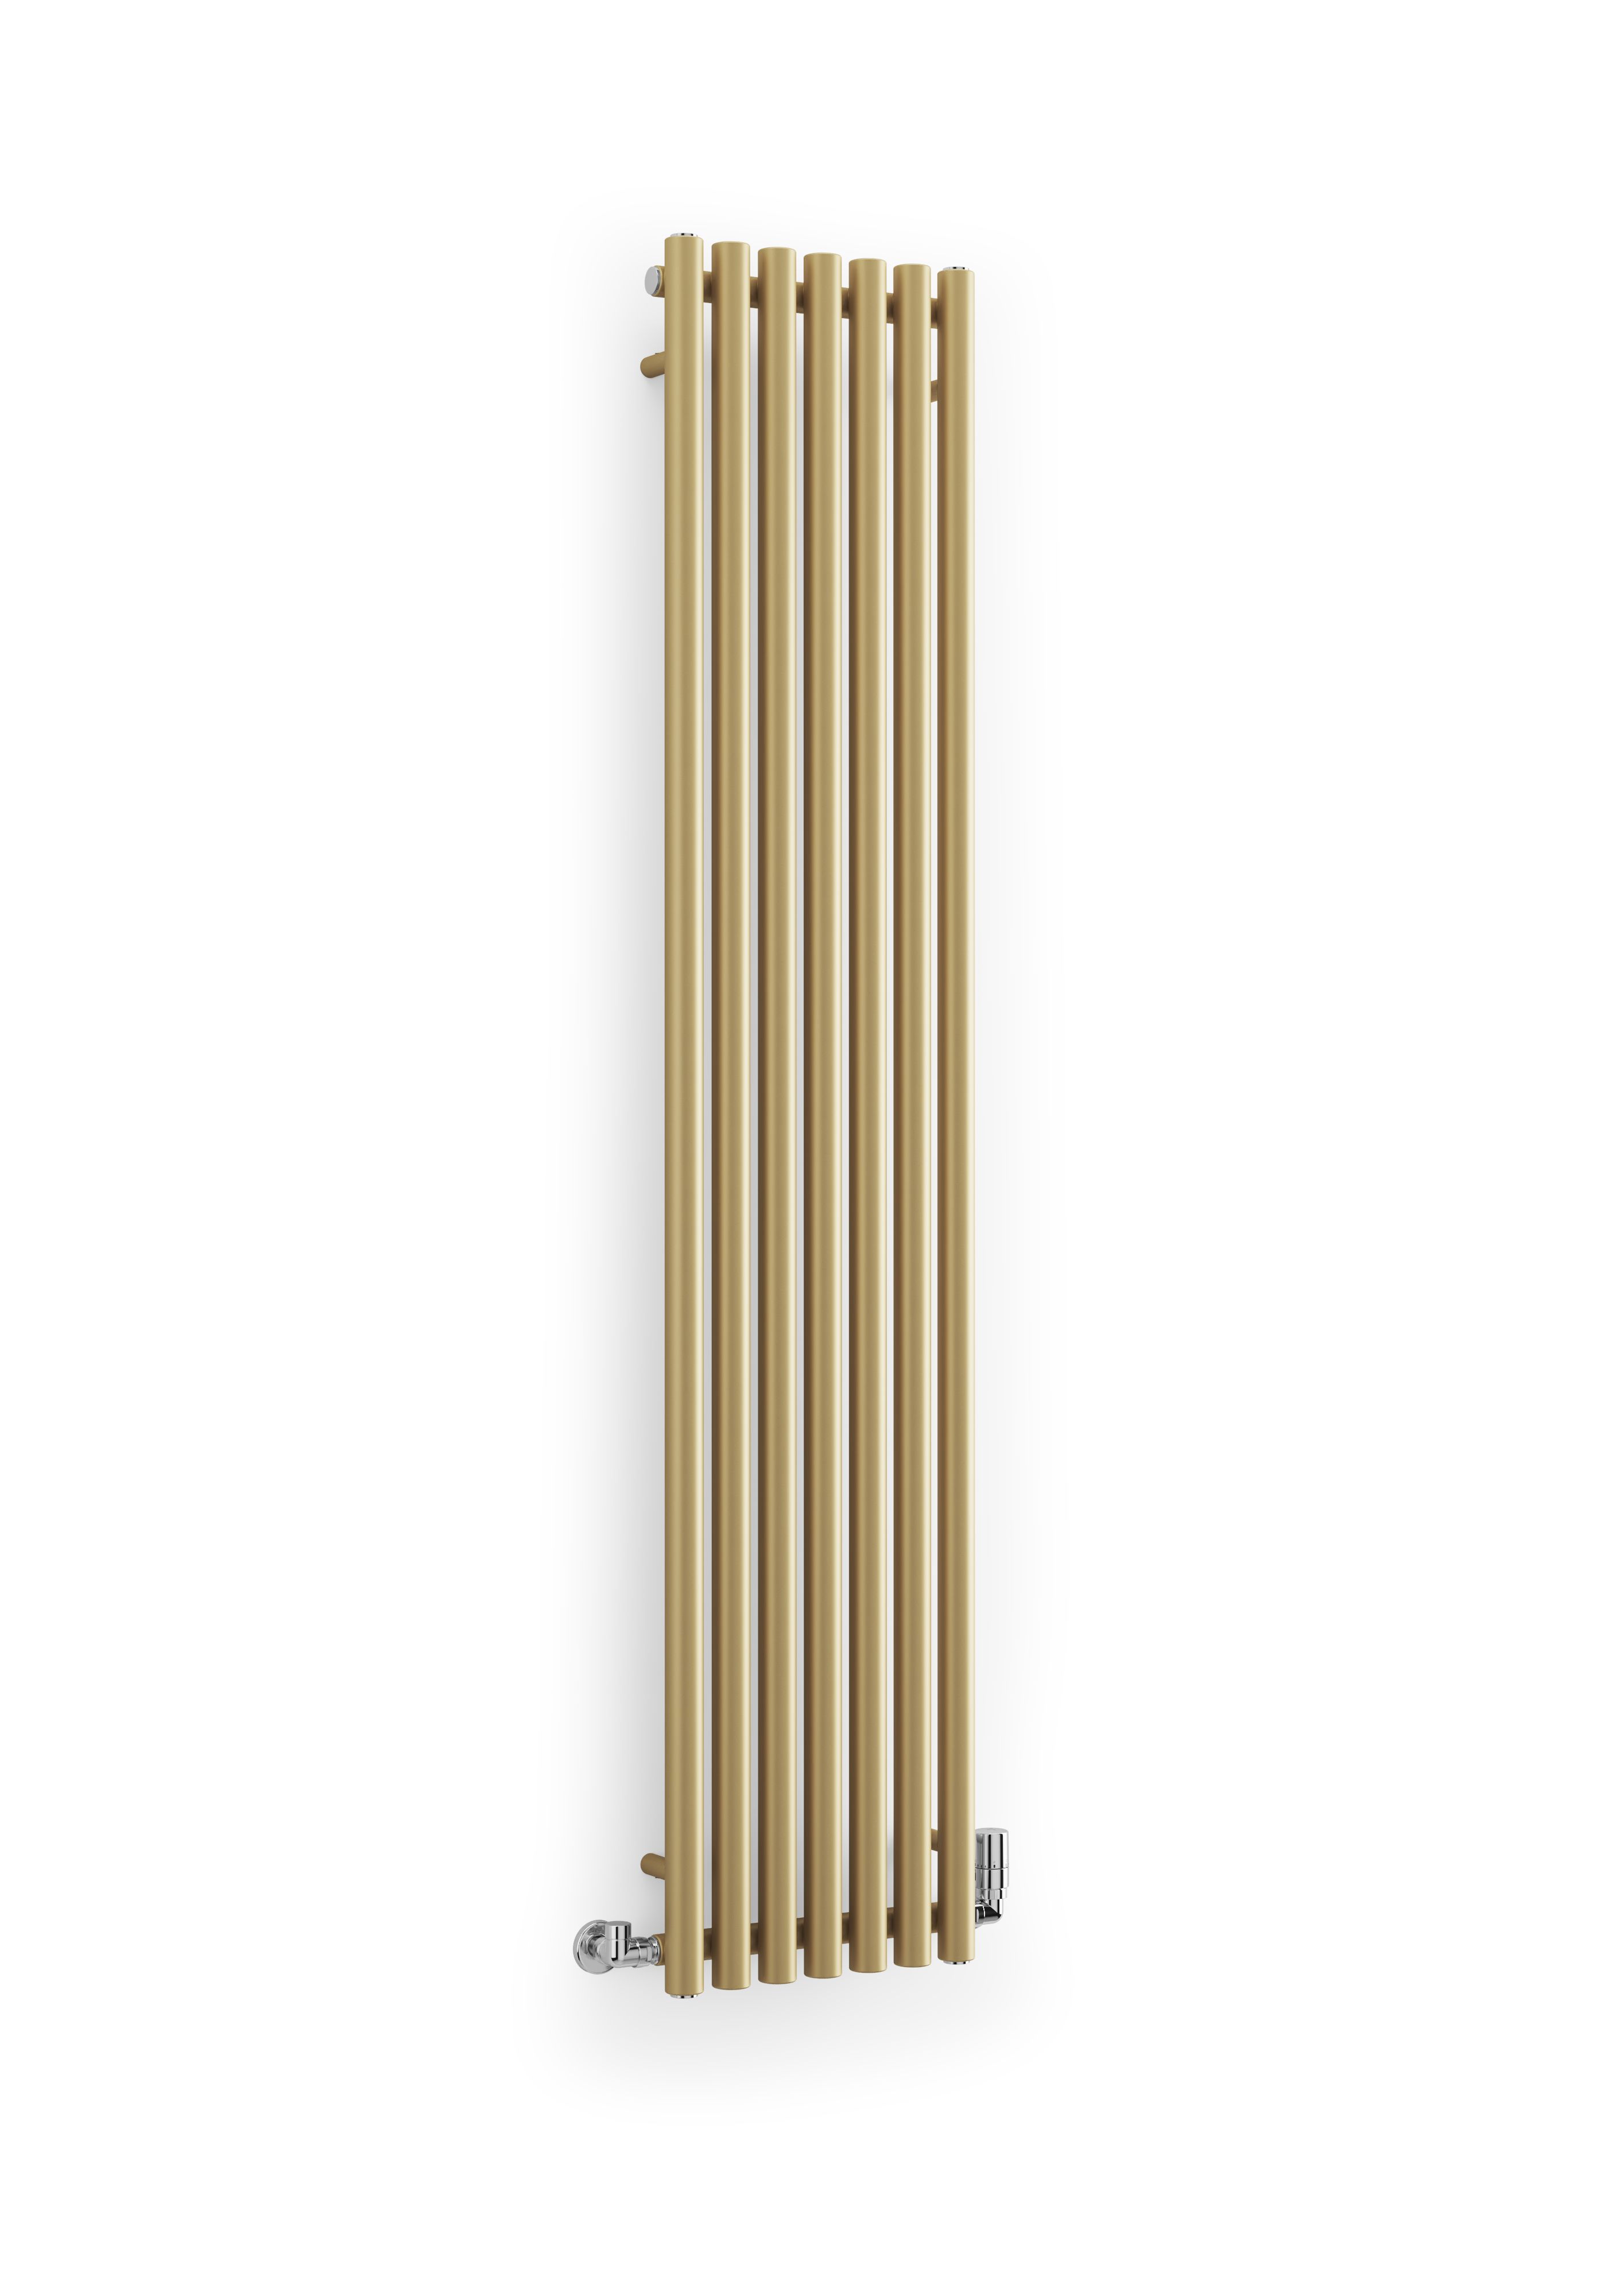 Terma Rolo Room Matt brass Horizontal or vertical Designer Radiator, (W)370mm x (H)1800mm